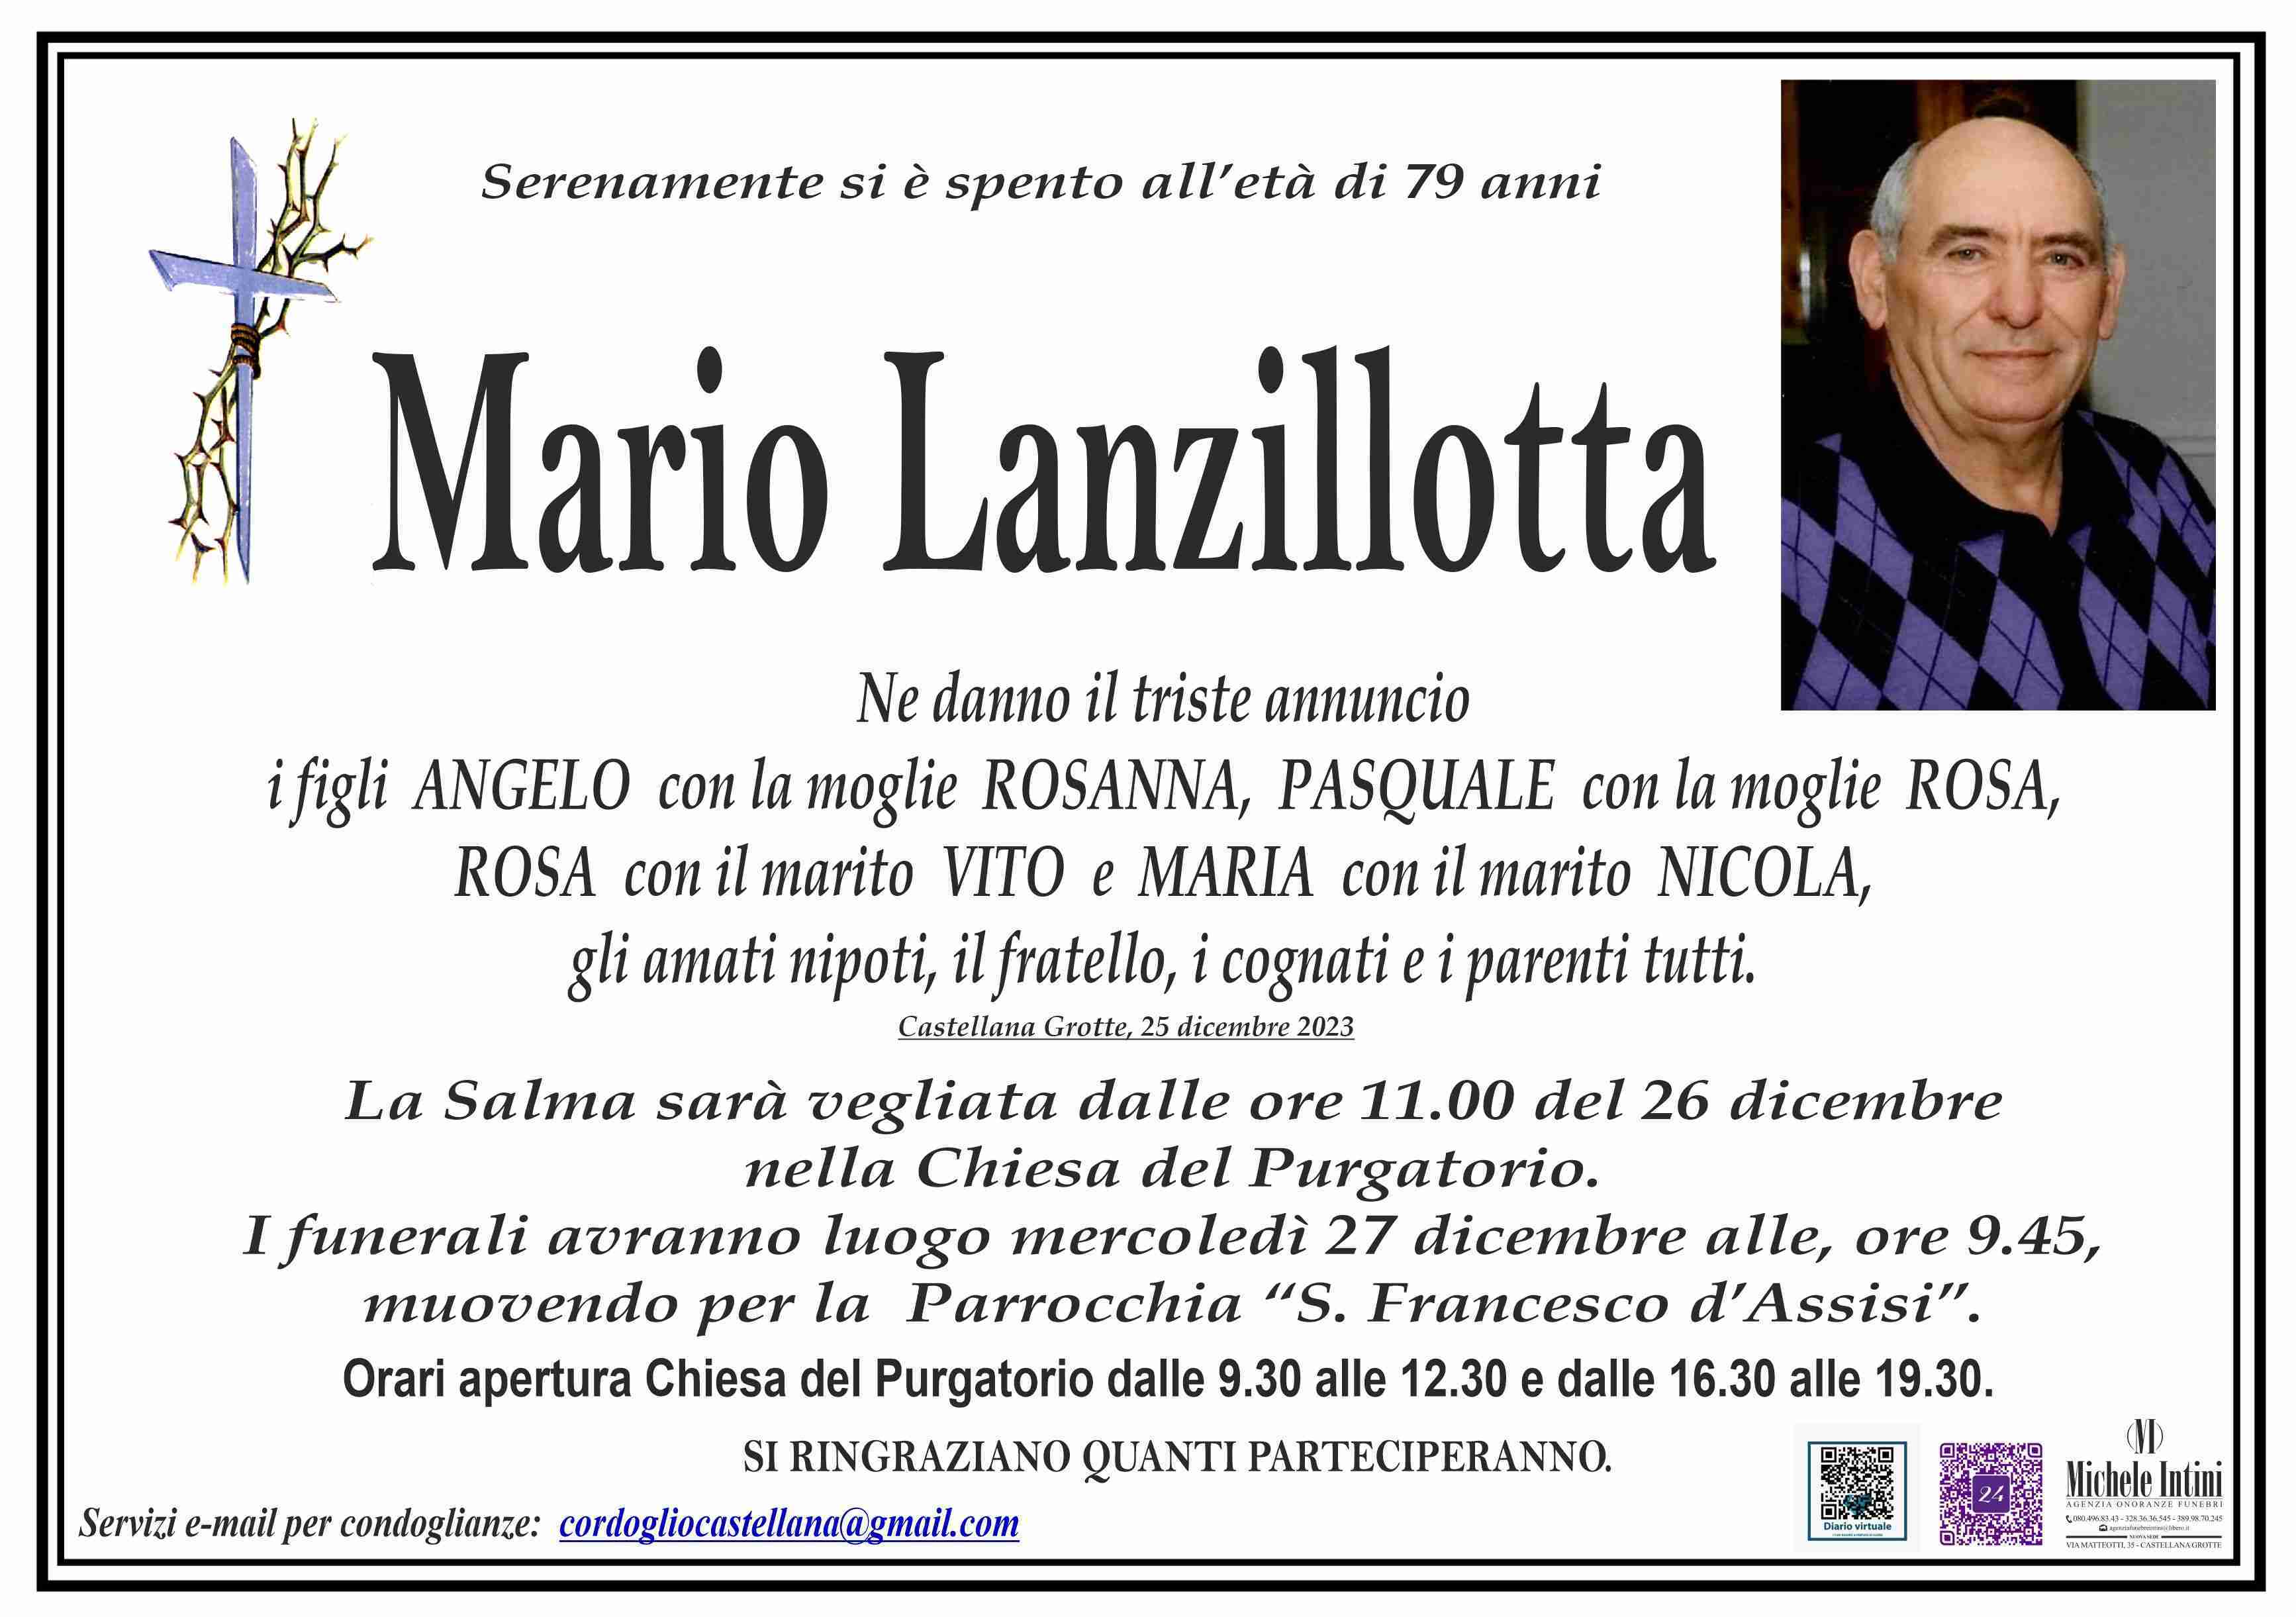 Mario Lanzillotta